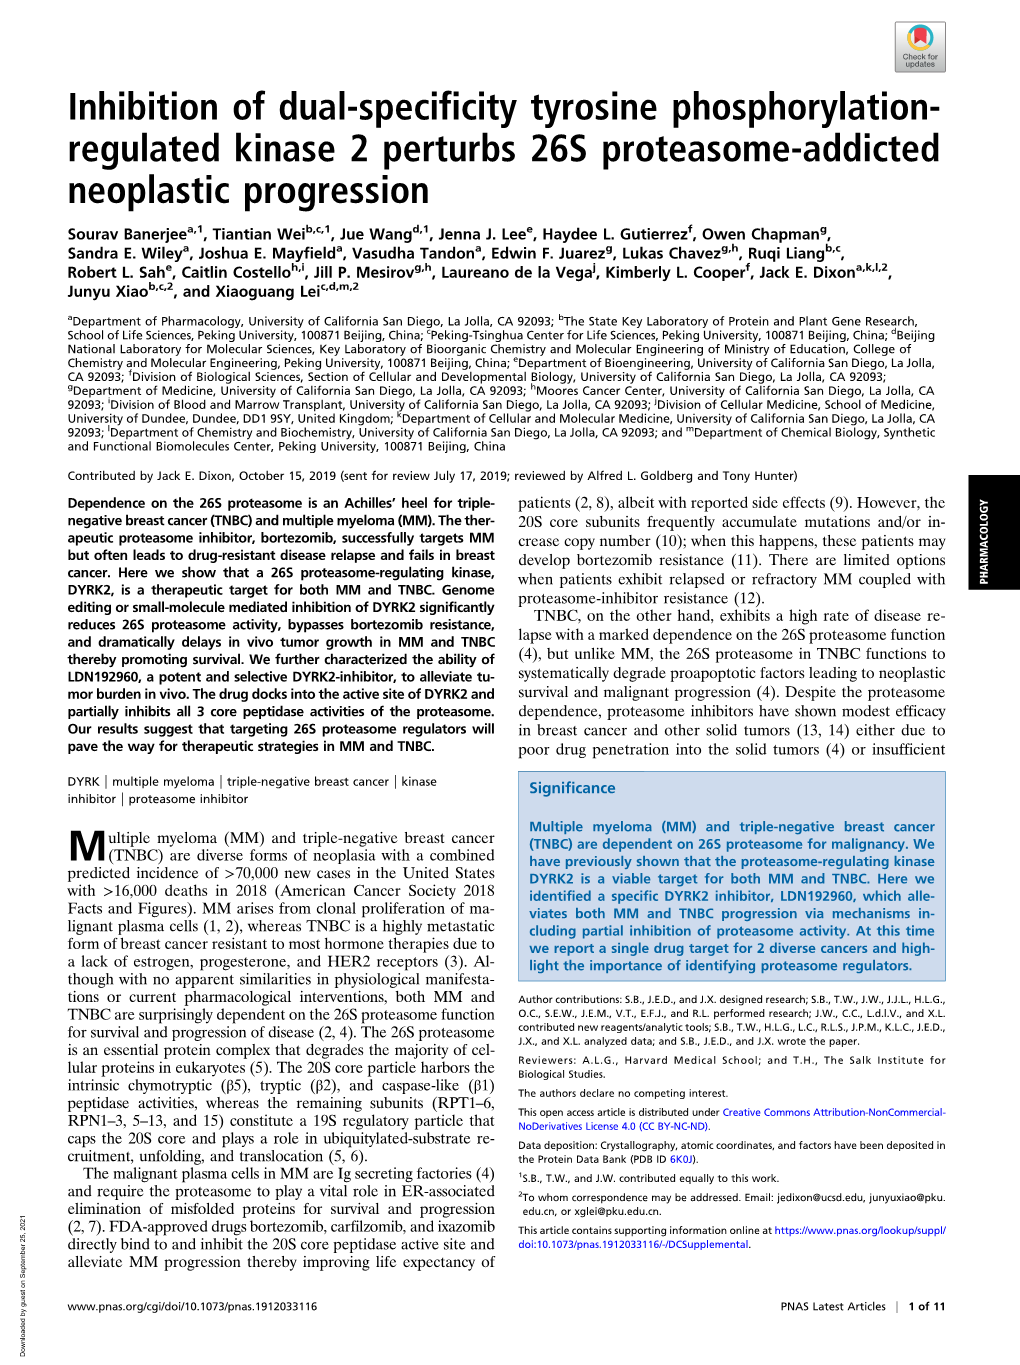 Inhibition of Dual-Specificity Tyrosine Phosphorylation-Regulated Kinase 2